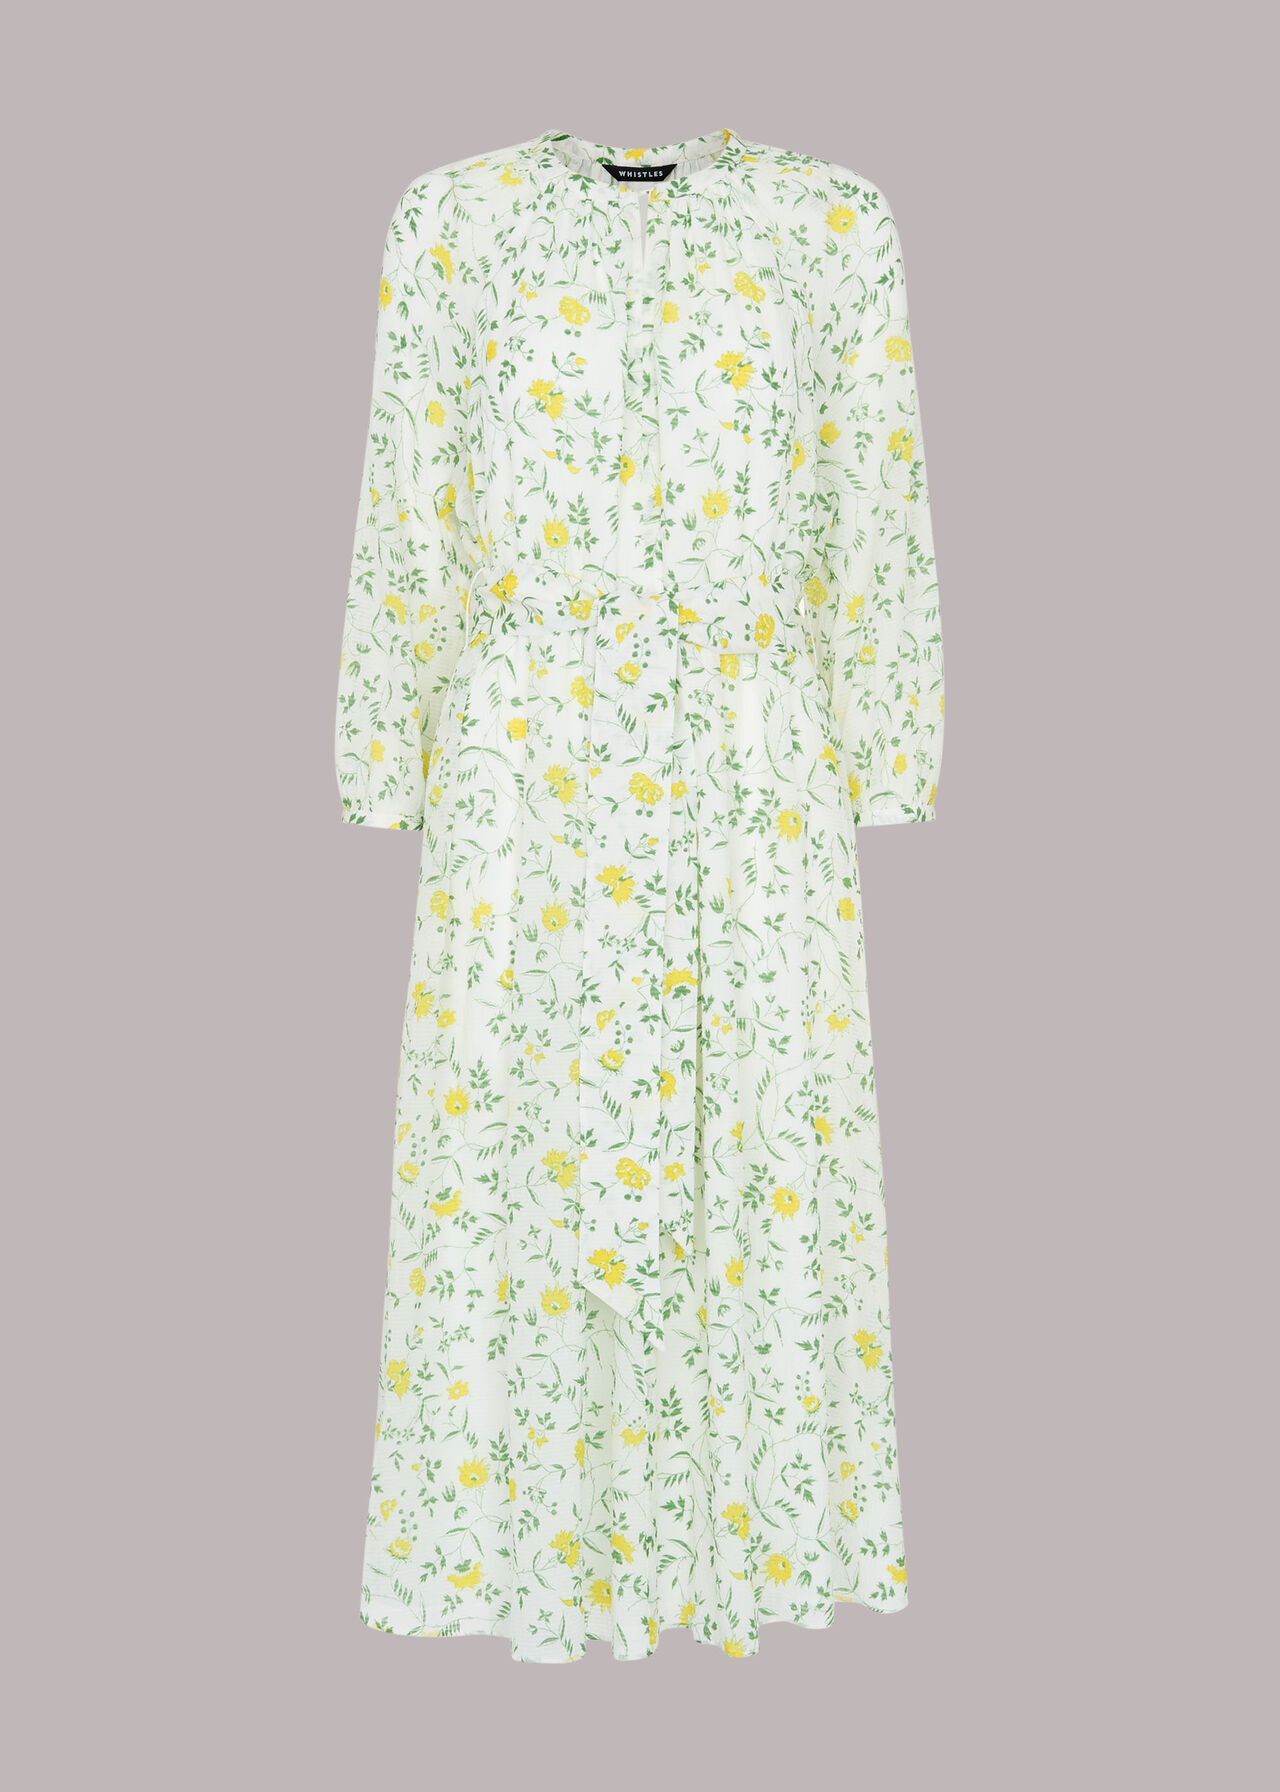 Savannah Floral Silk Mix Dress